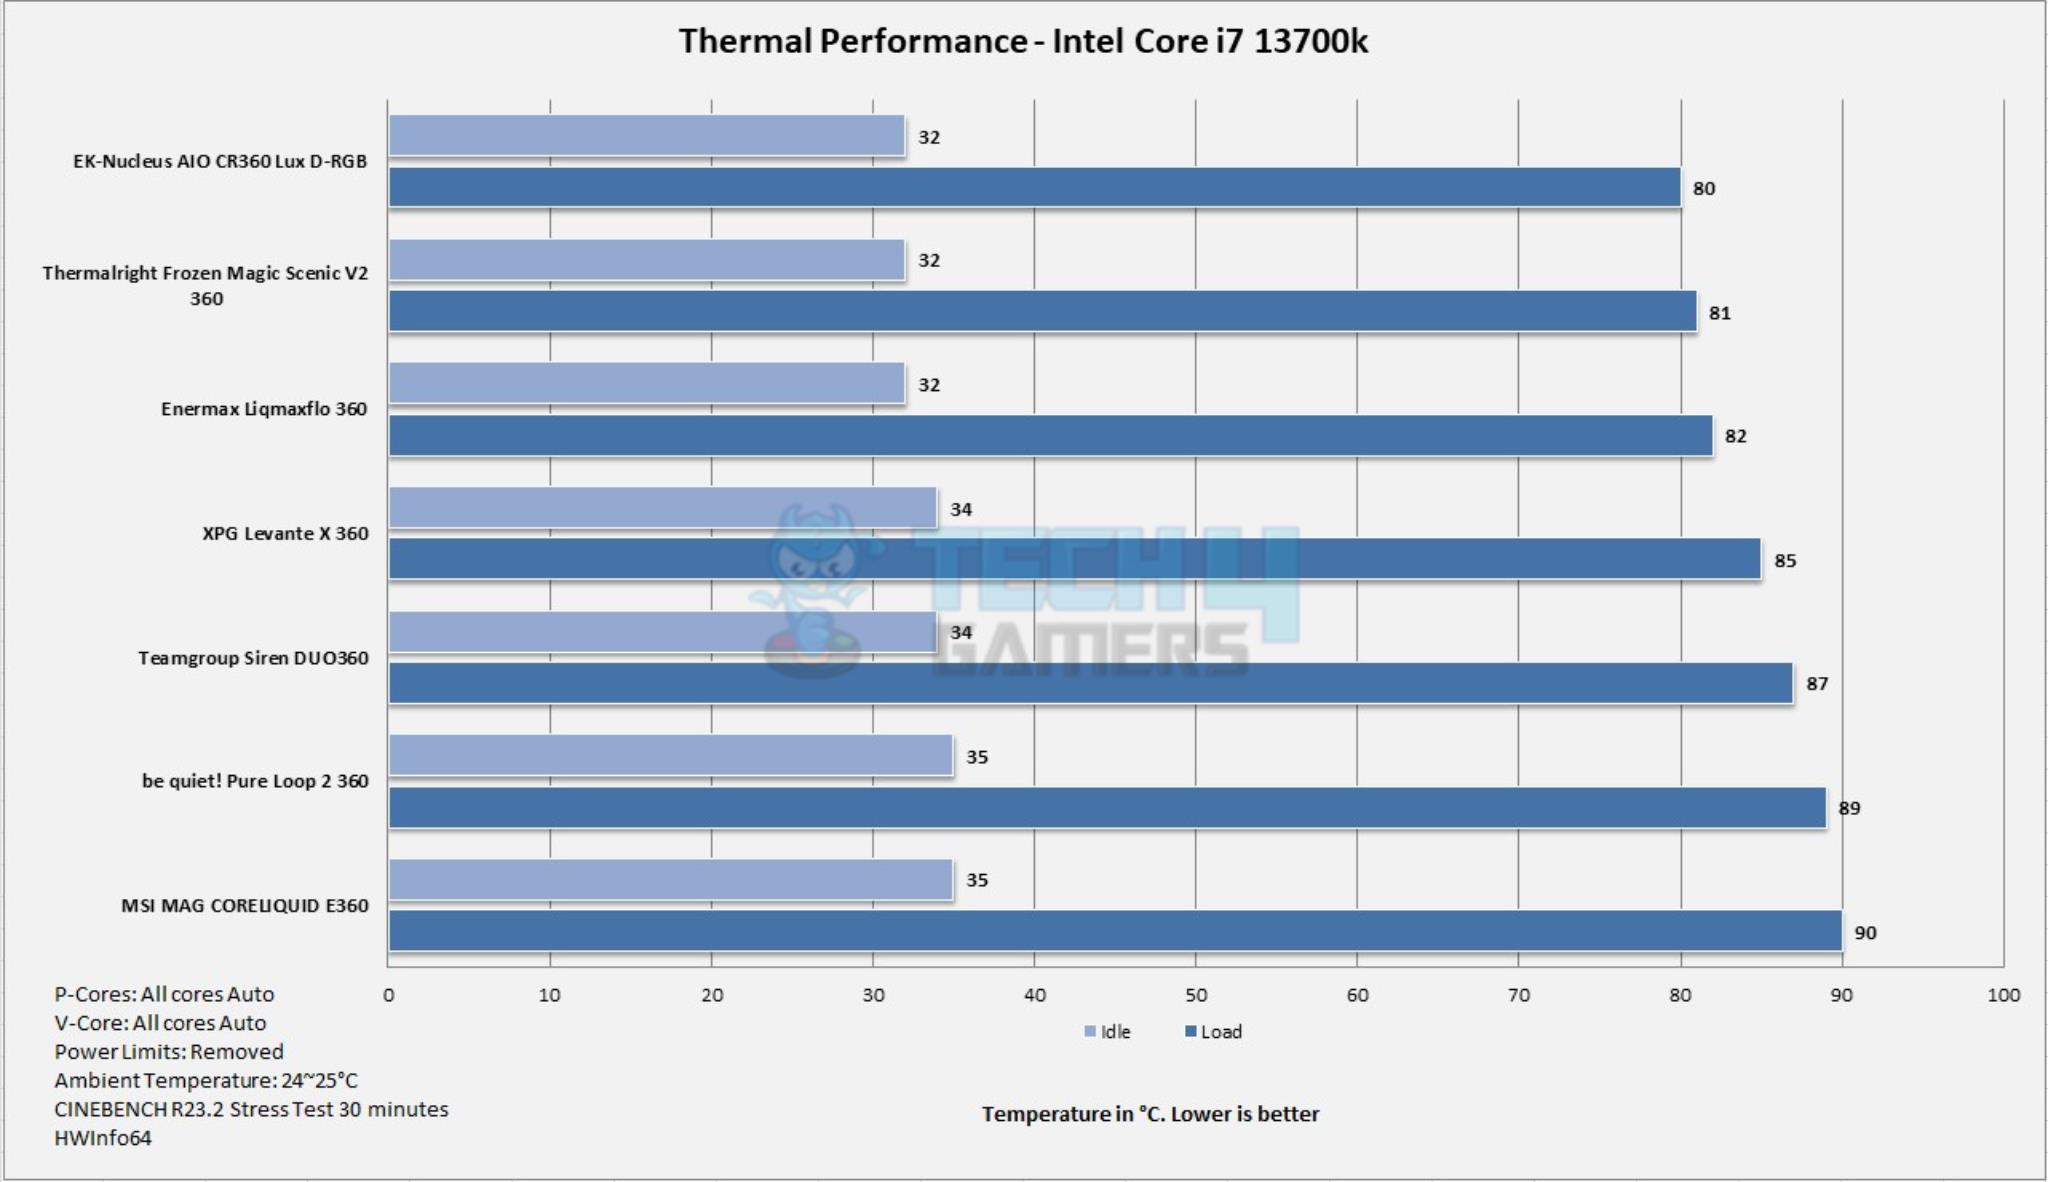 MSI MAG CORELIQUID E360 — Thermal Performance